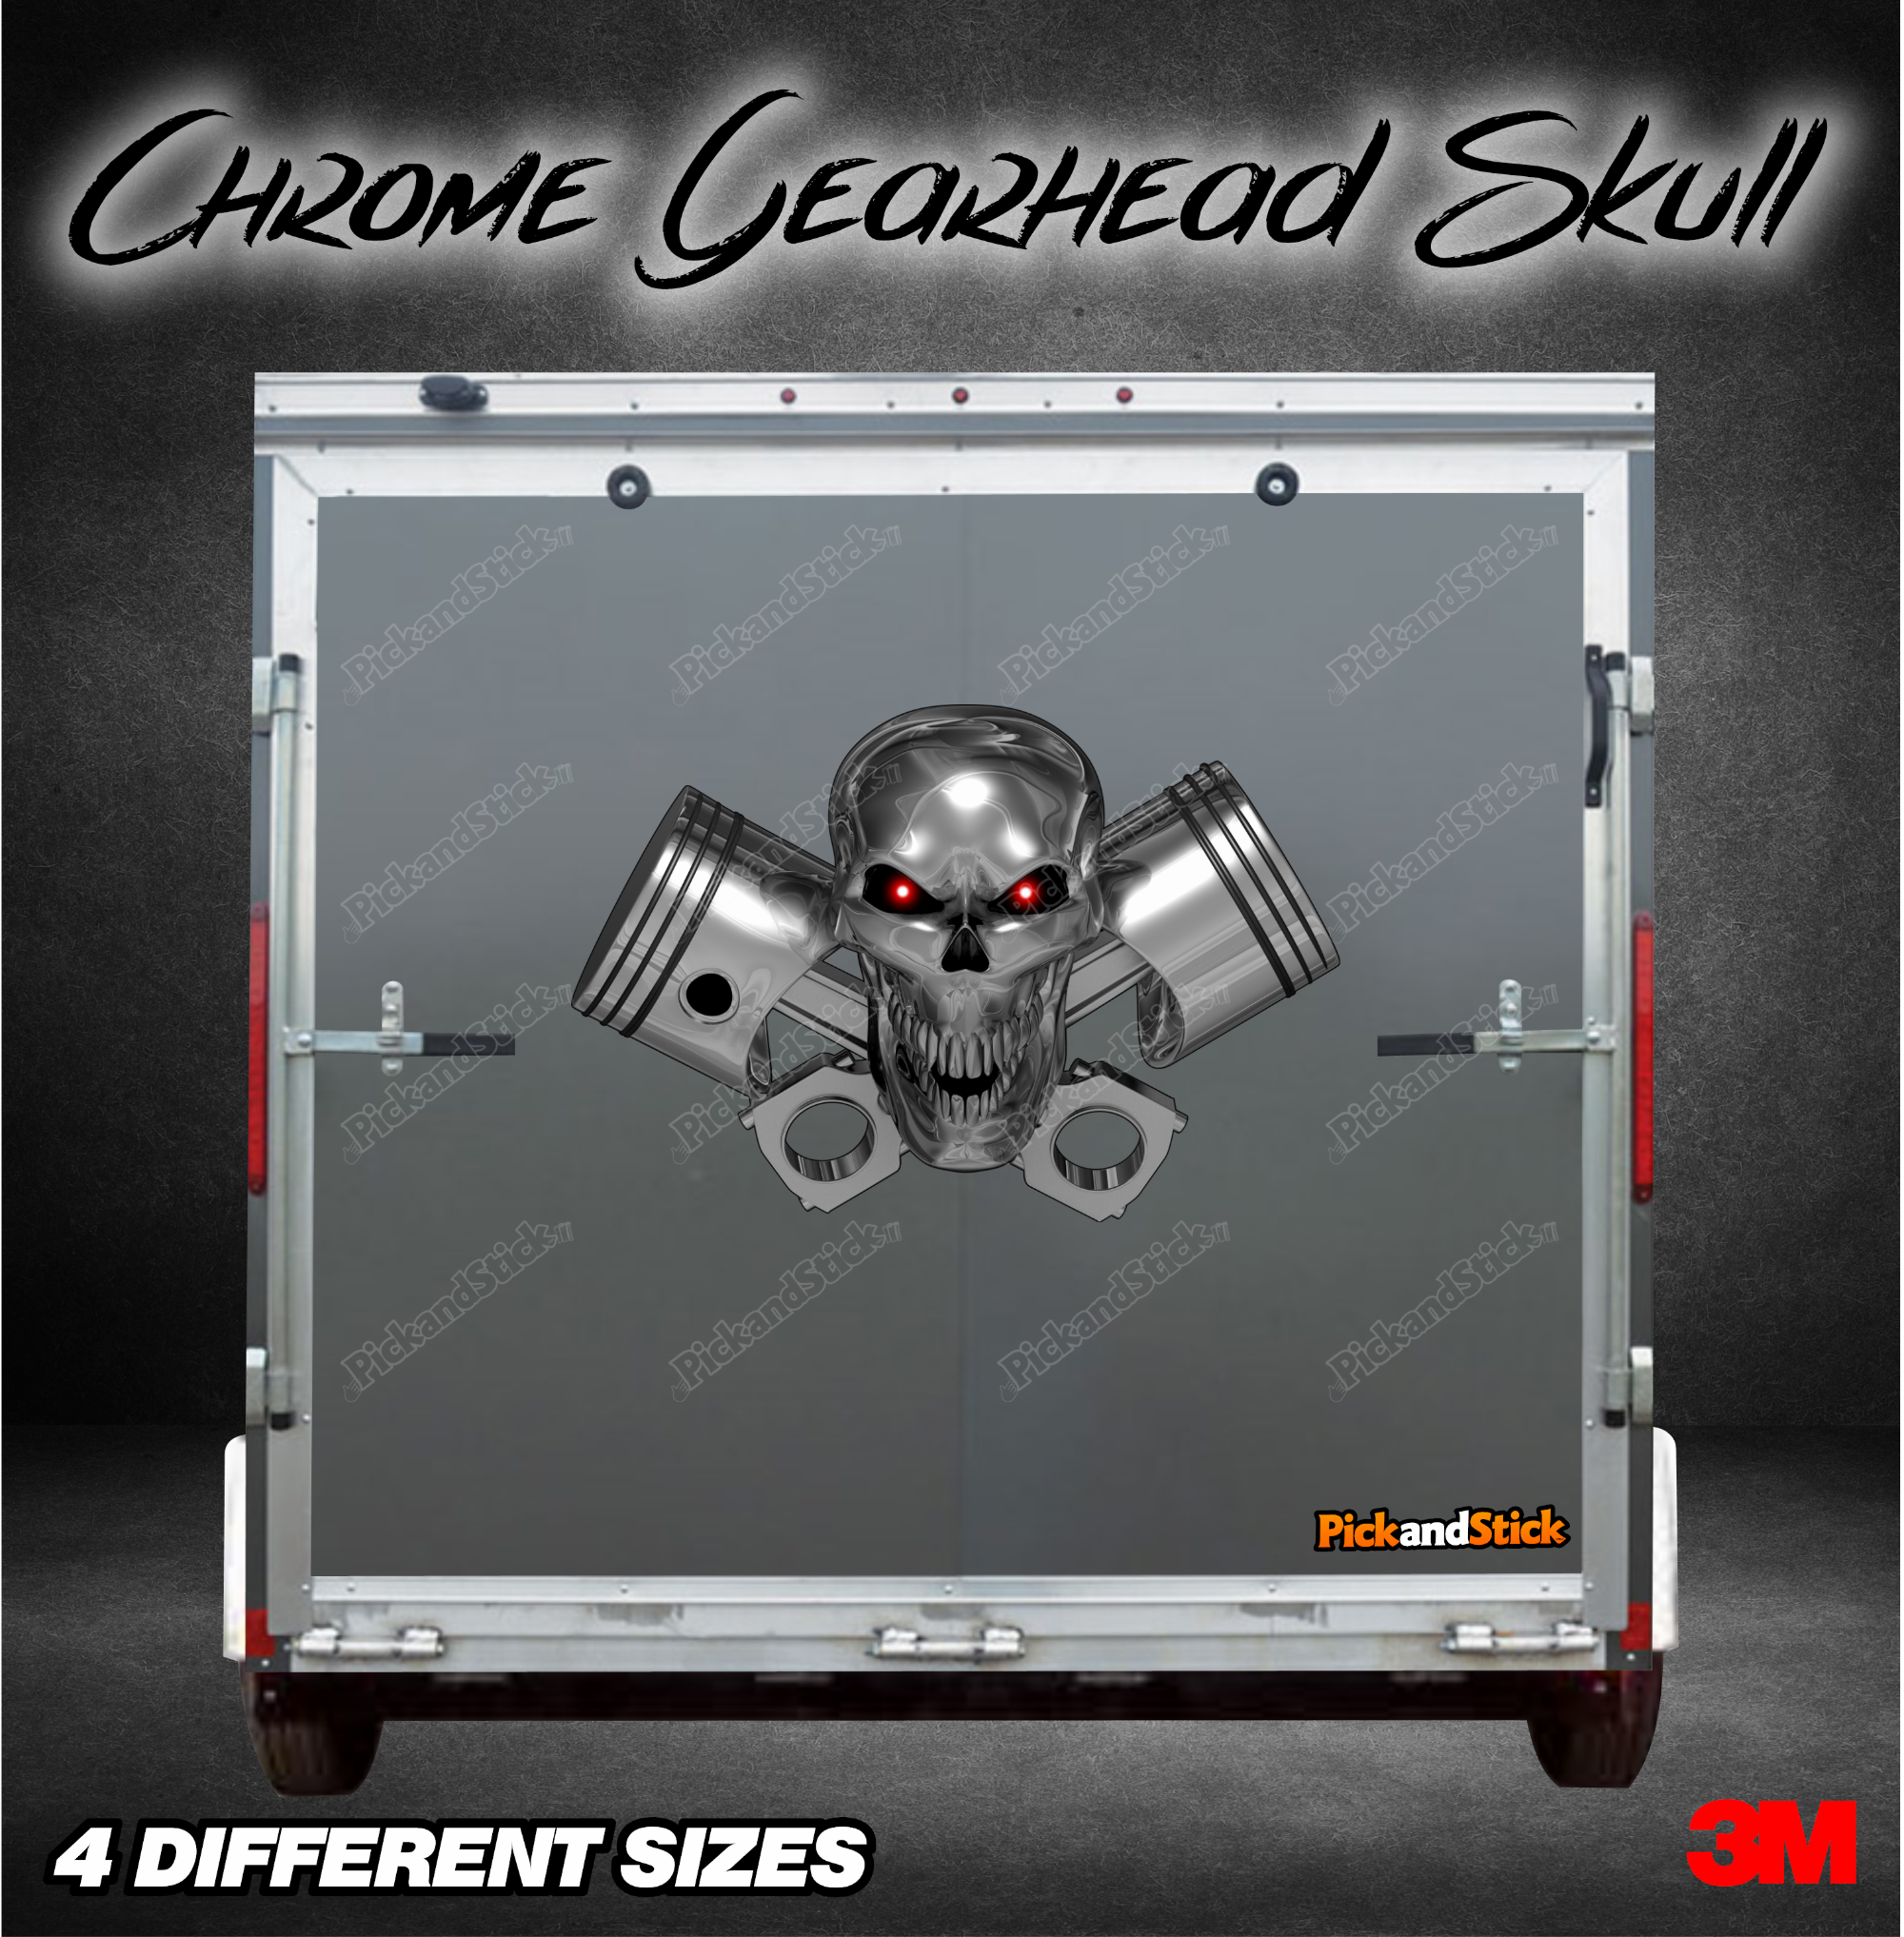 Chrome Gearhead Skull Trailer Graphic - PickandStickcom